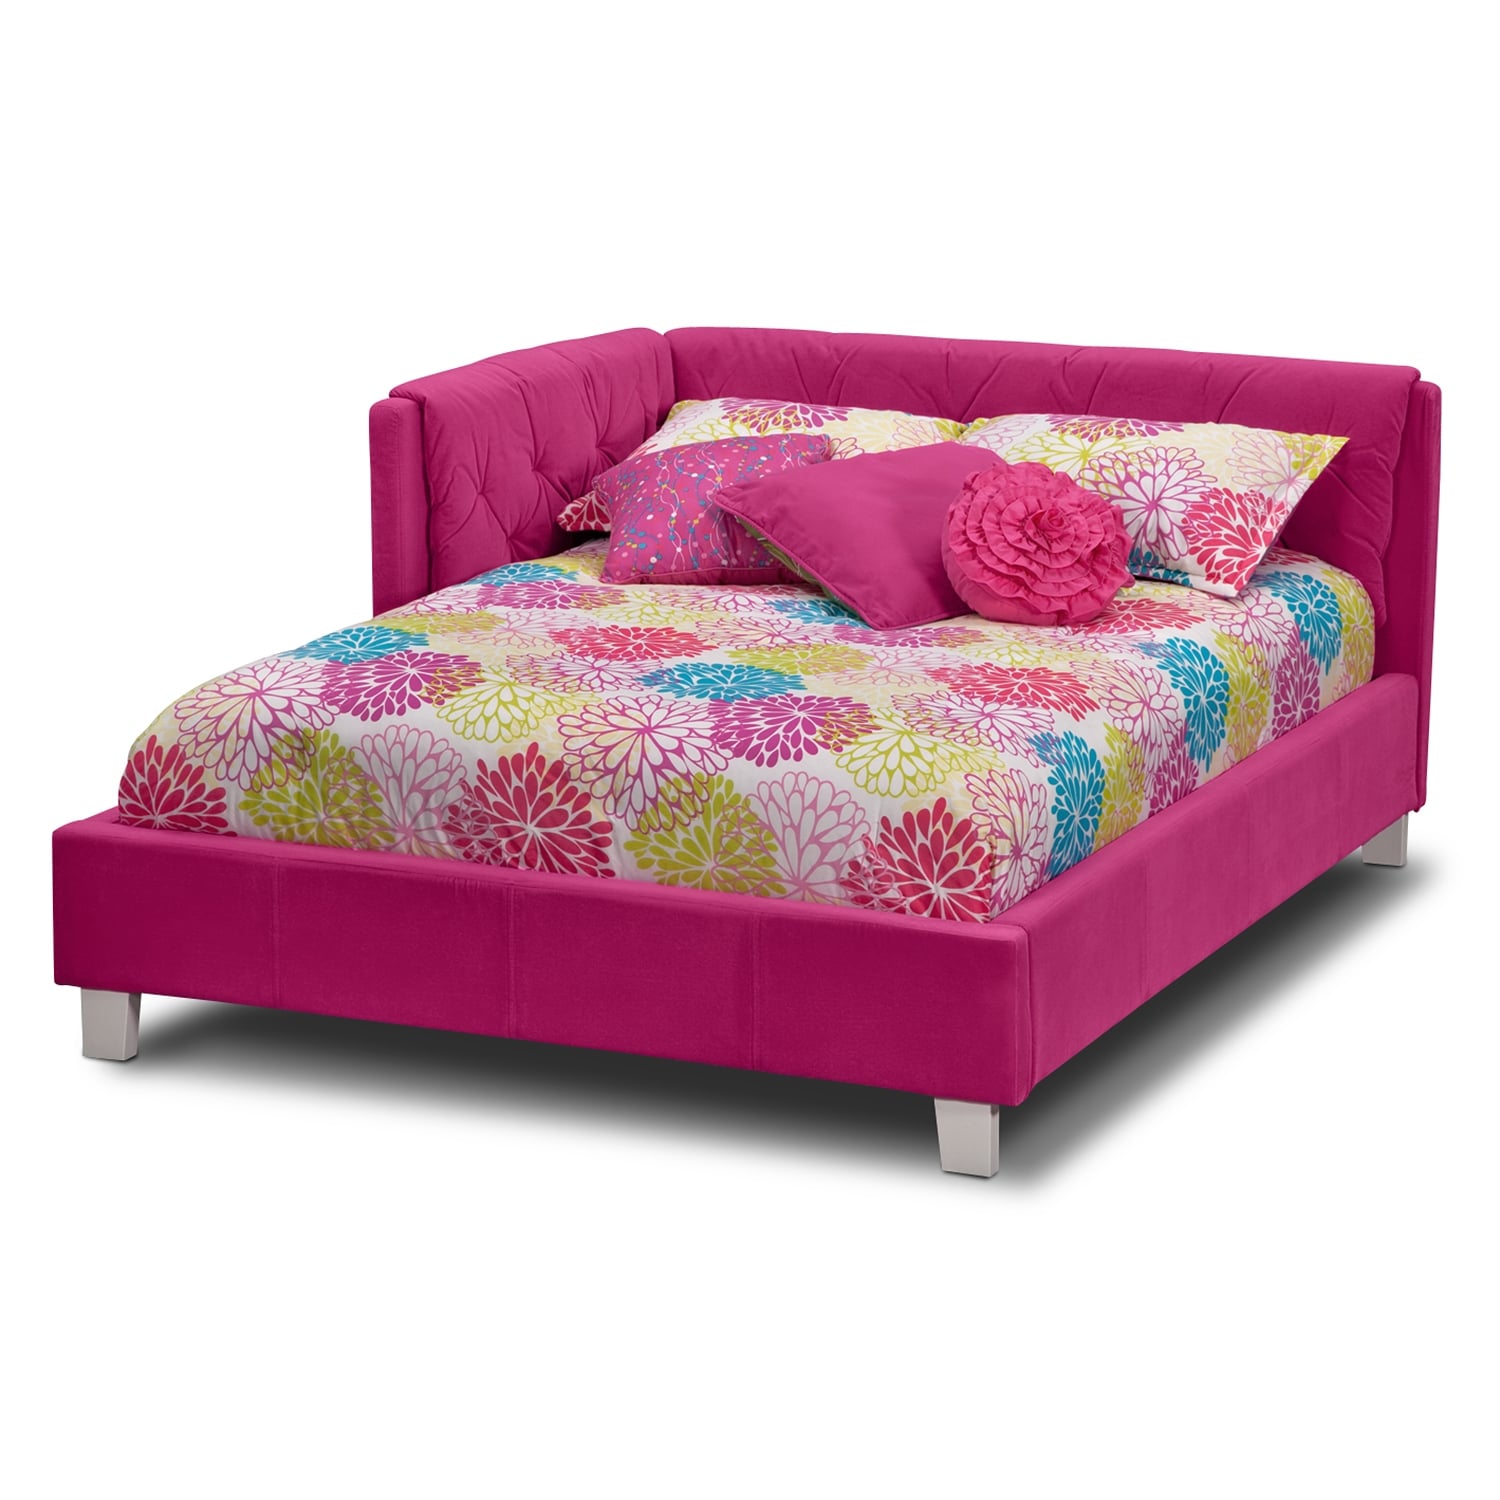 Jordan Full Corner Bed - Pink | Value City Furniture